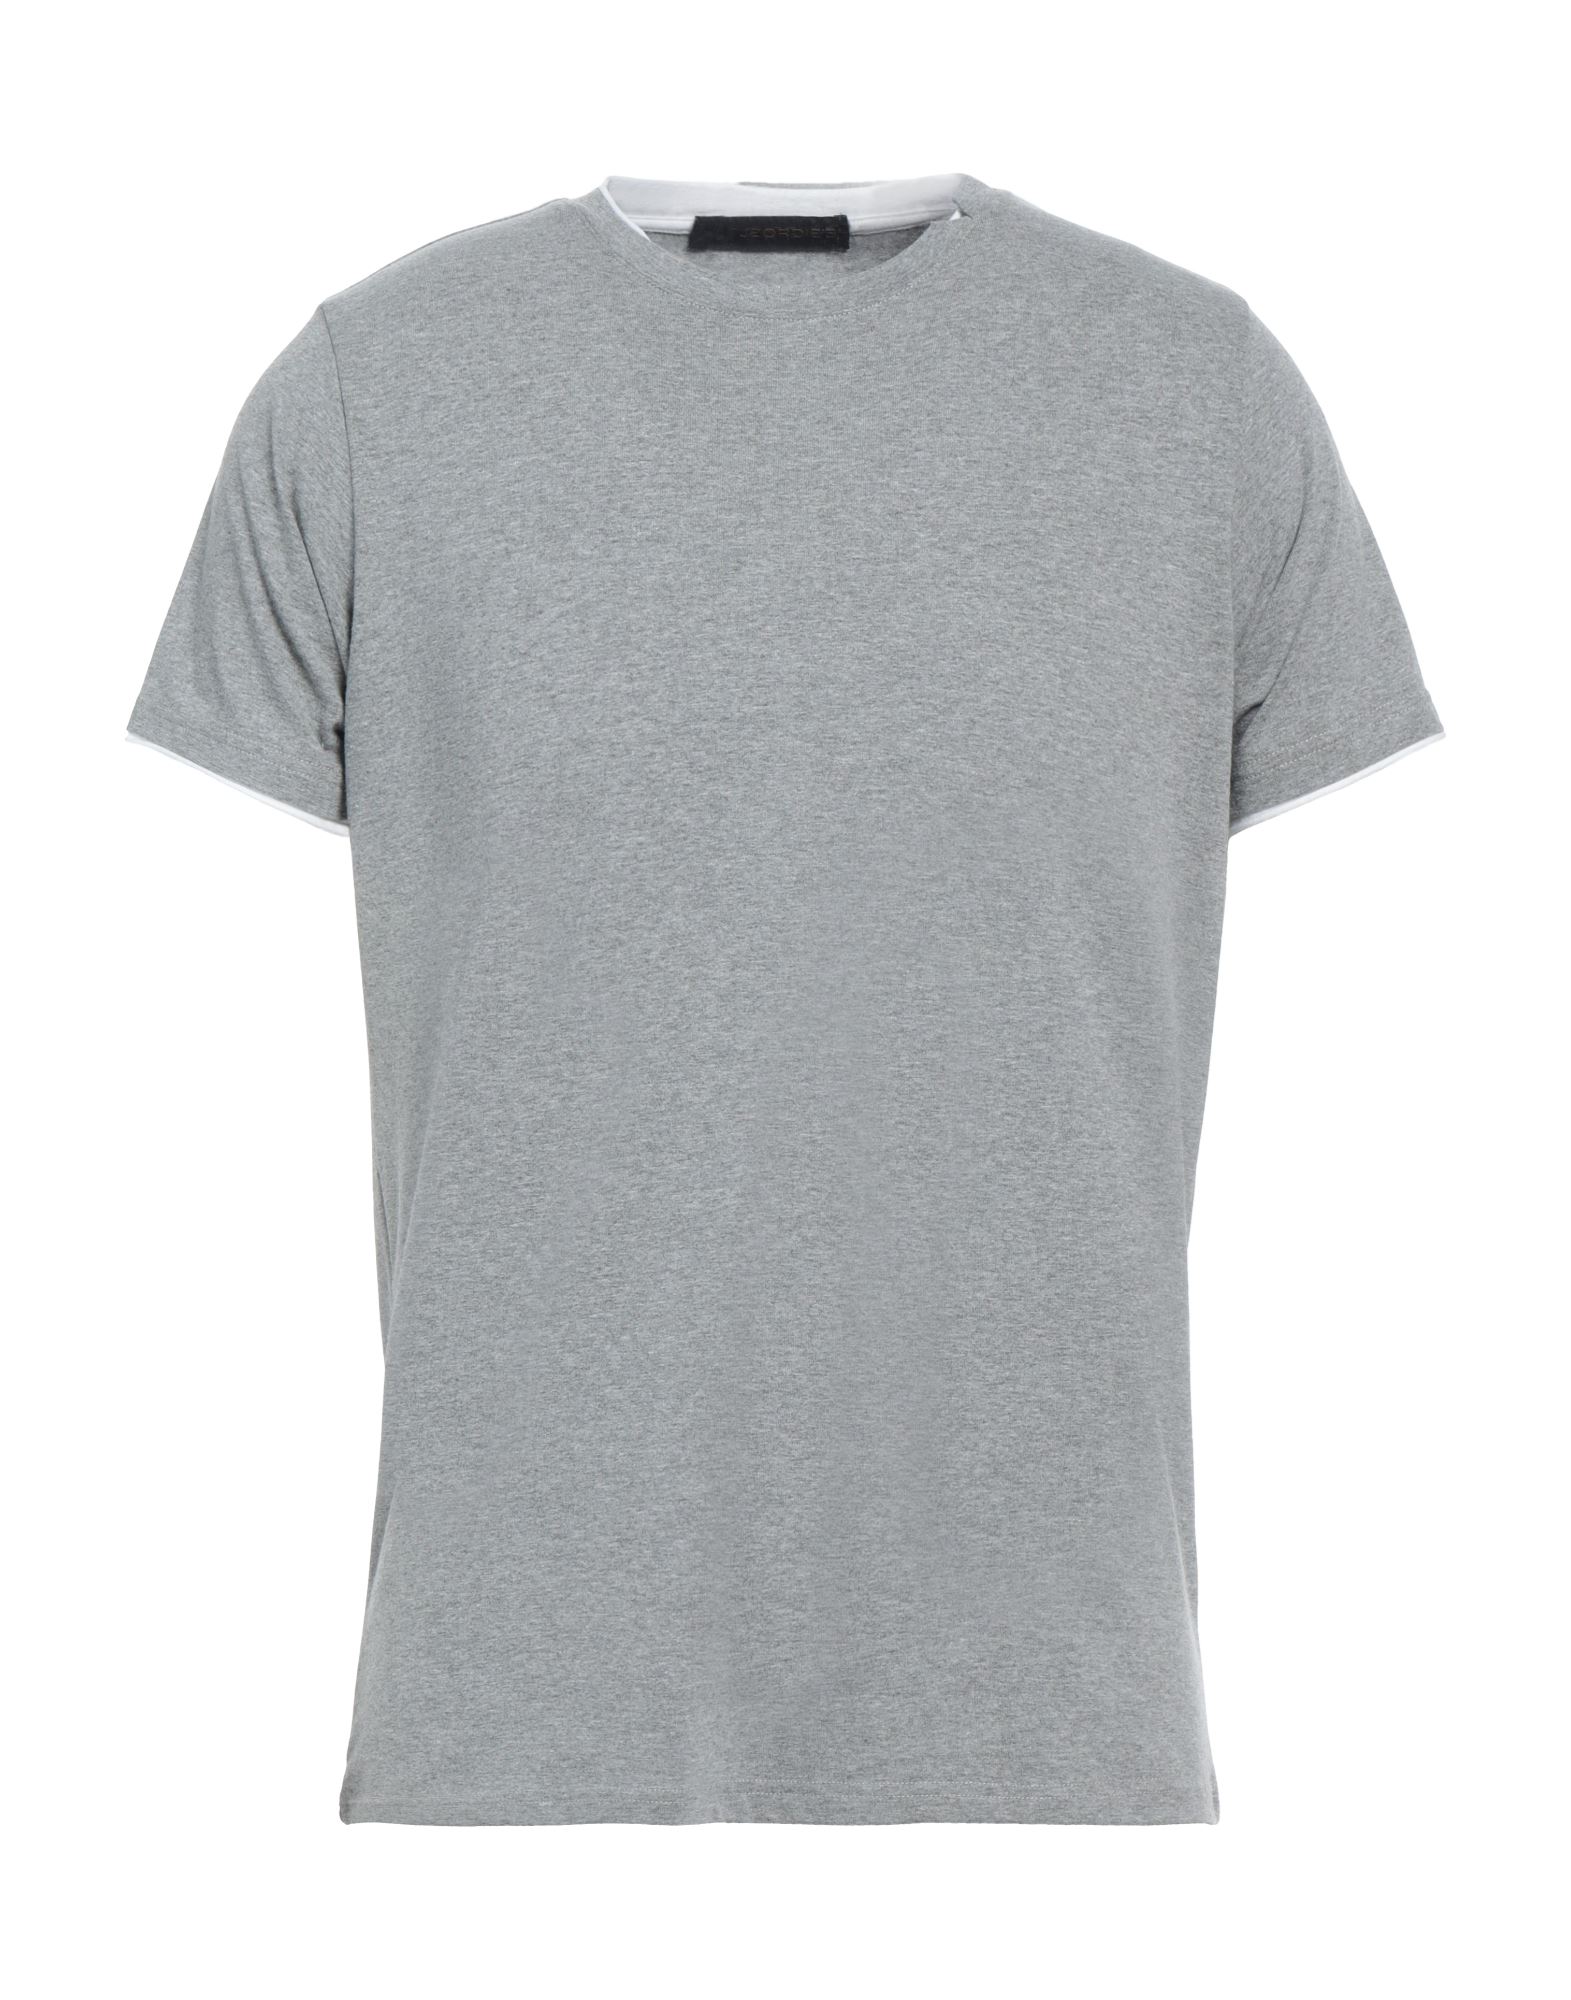 Jeordie's Man T-shirt Grey Size 3xl Cotton, Elastane